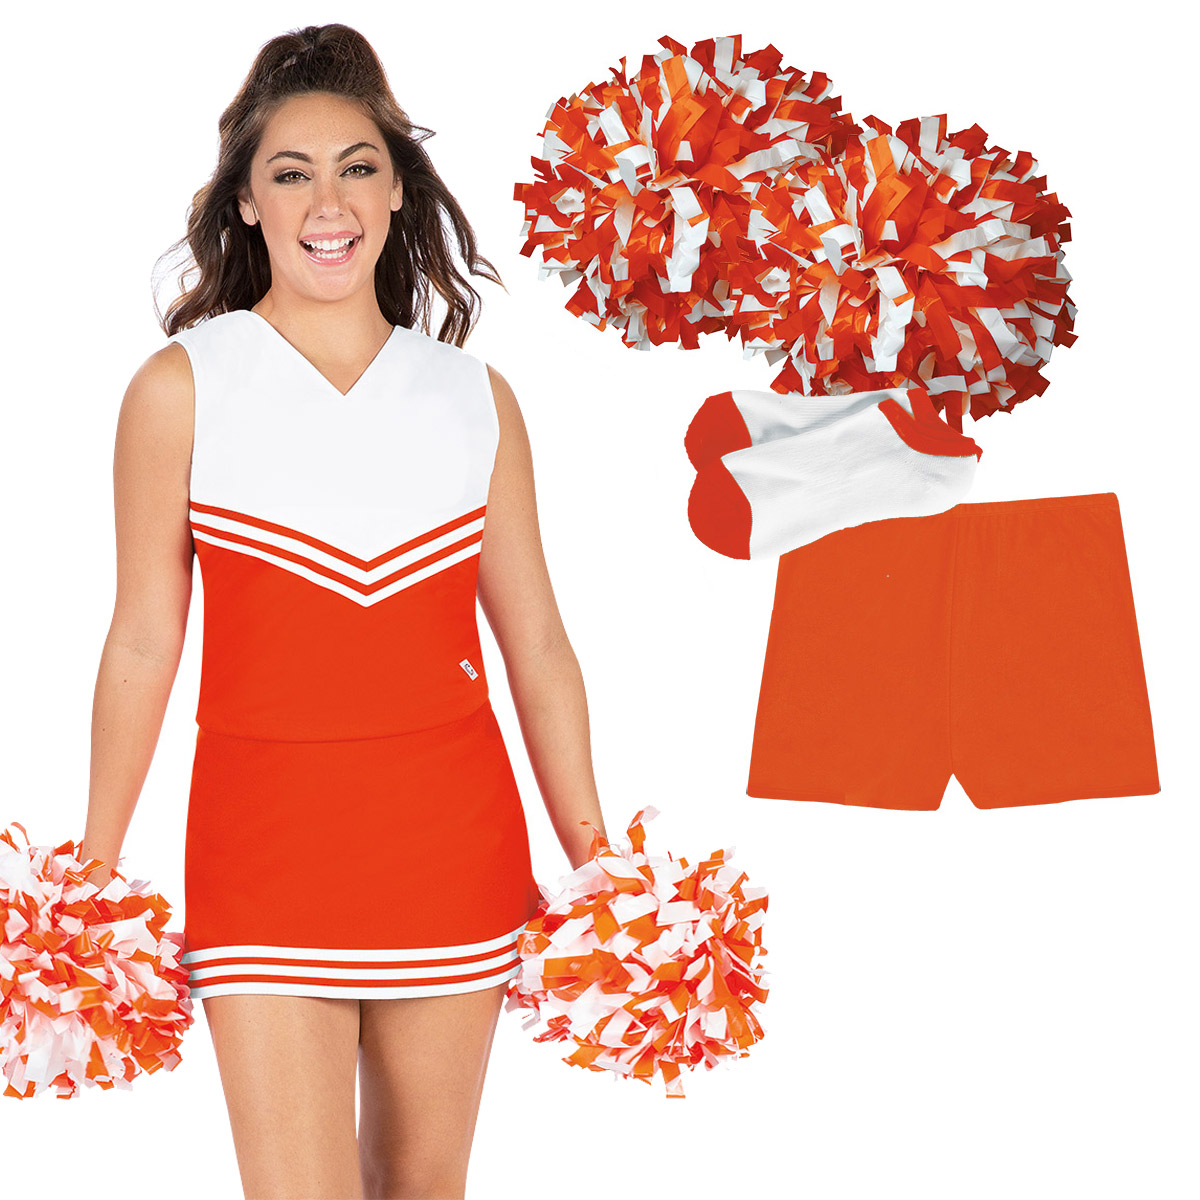 Cheer Uniform Spirit Pack 2